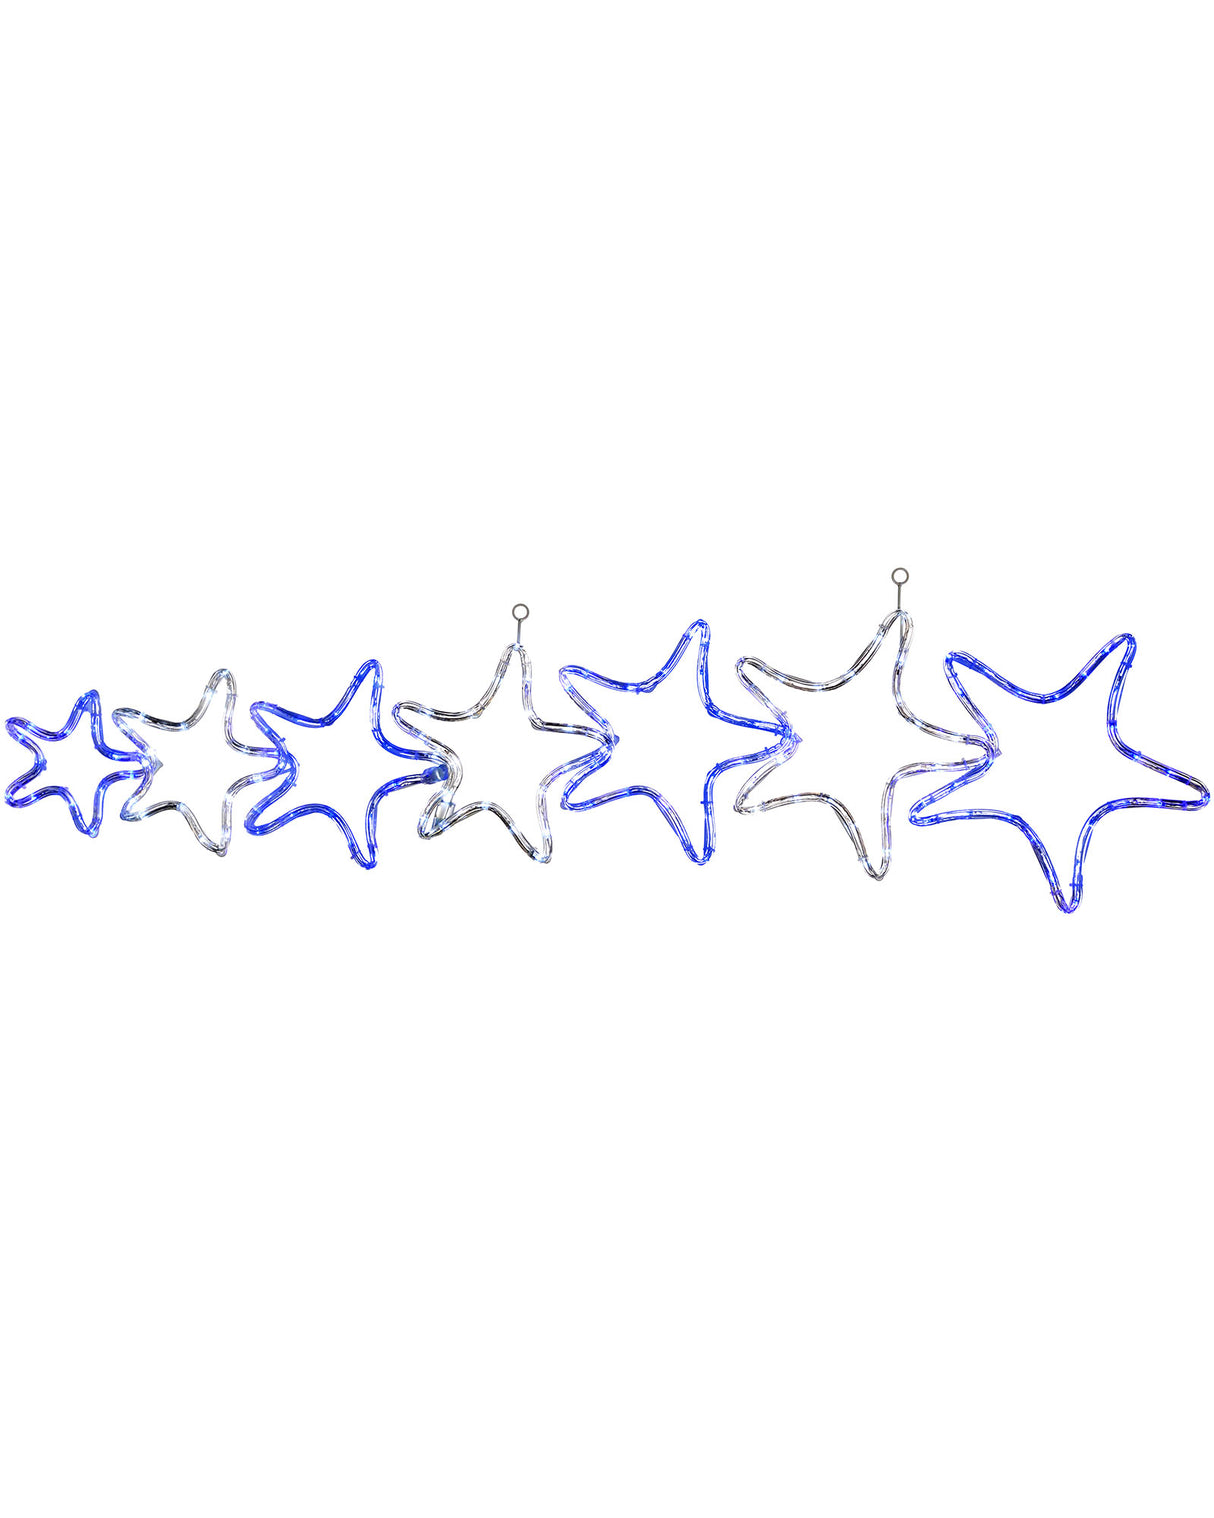 7-Star Motif Rope Light Silhouette, White/Blue, 119 cm